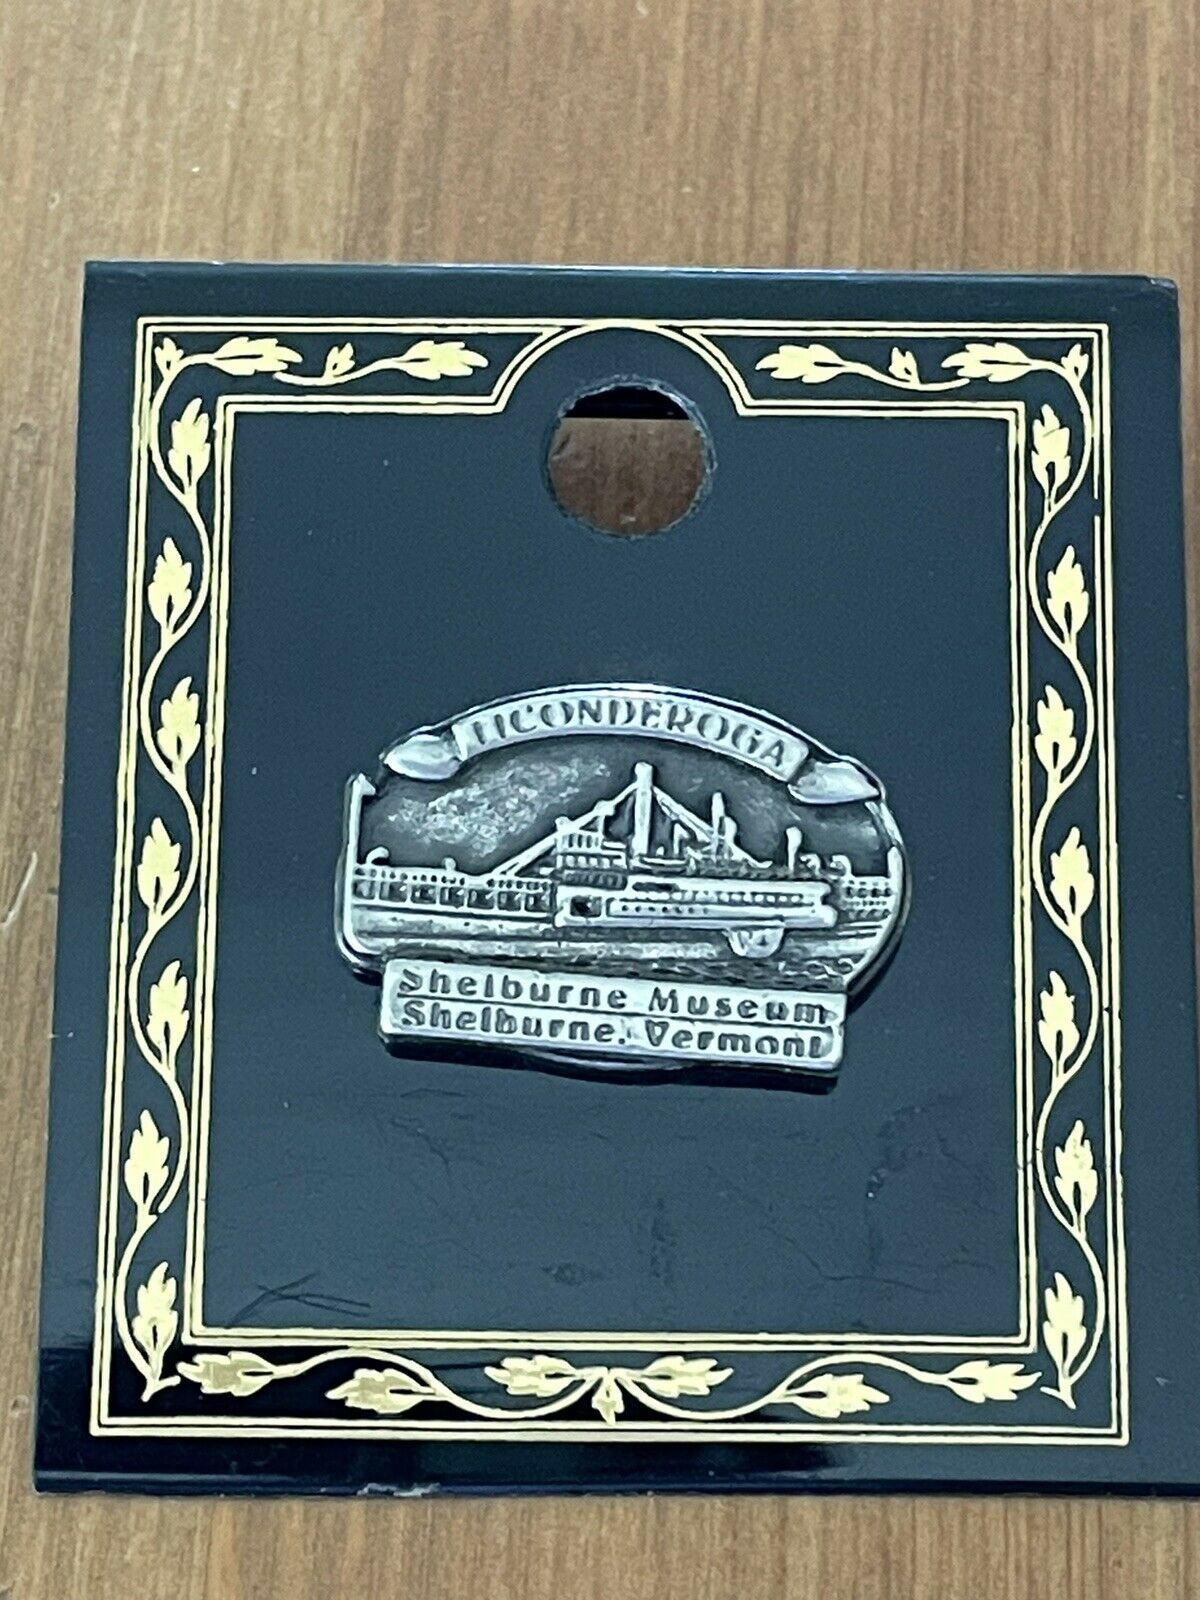 Shelburne Museum Vermont Ticonderoga Steamboat Travel Souvenir Pin